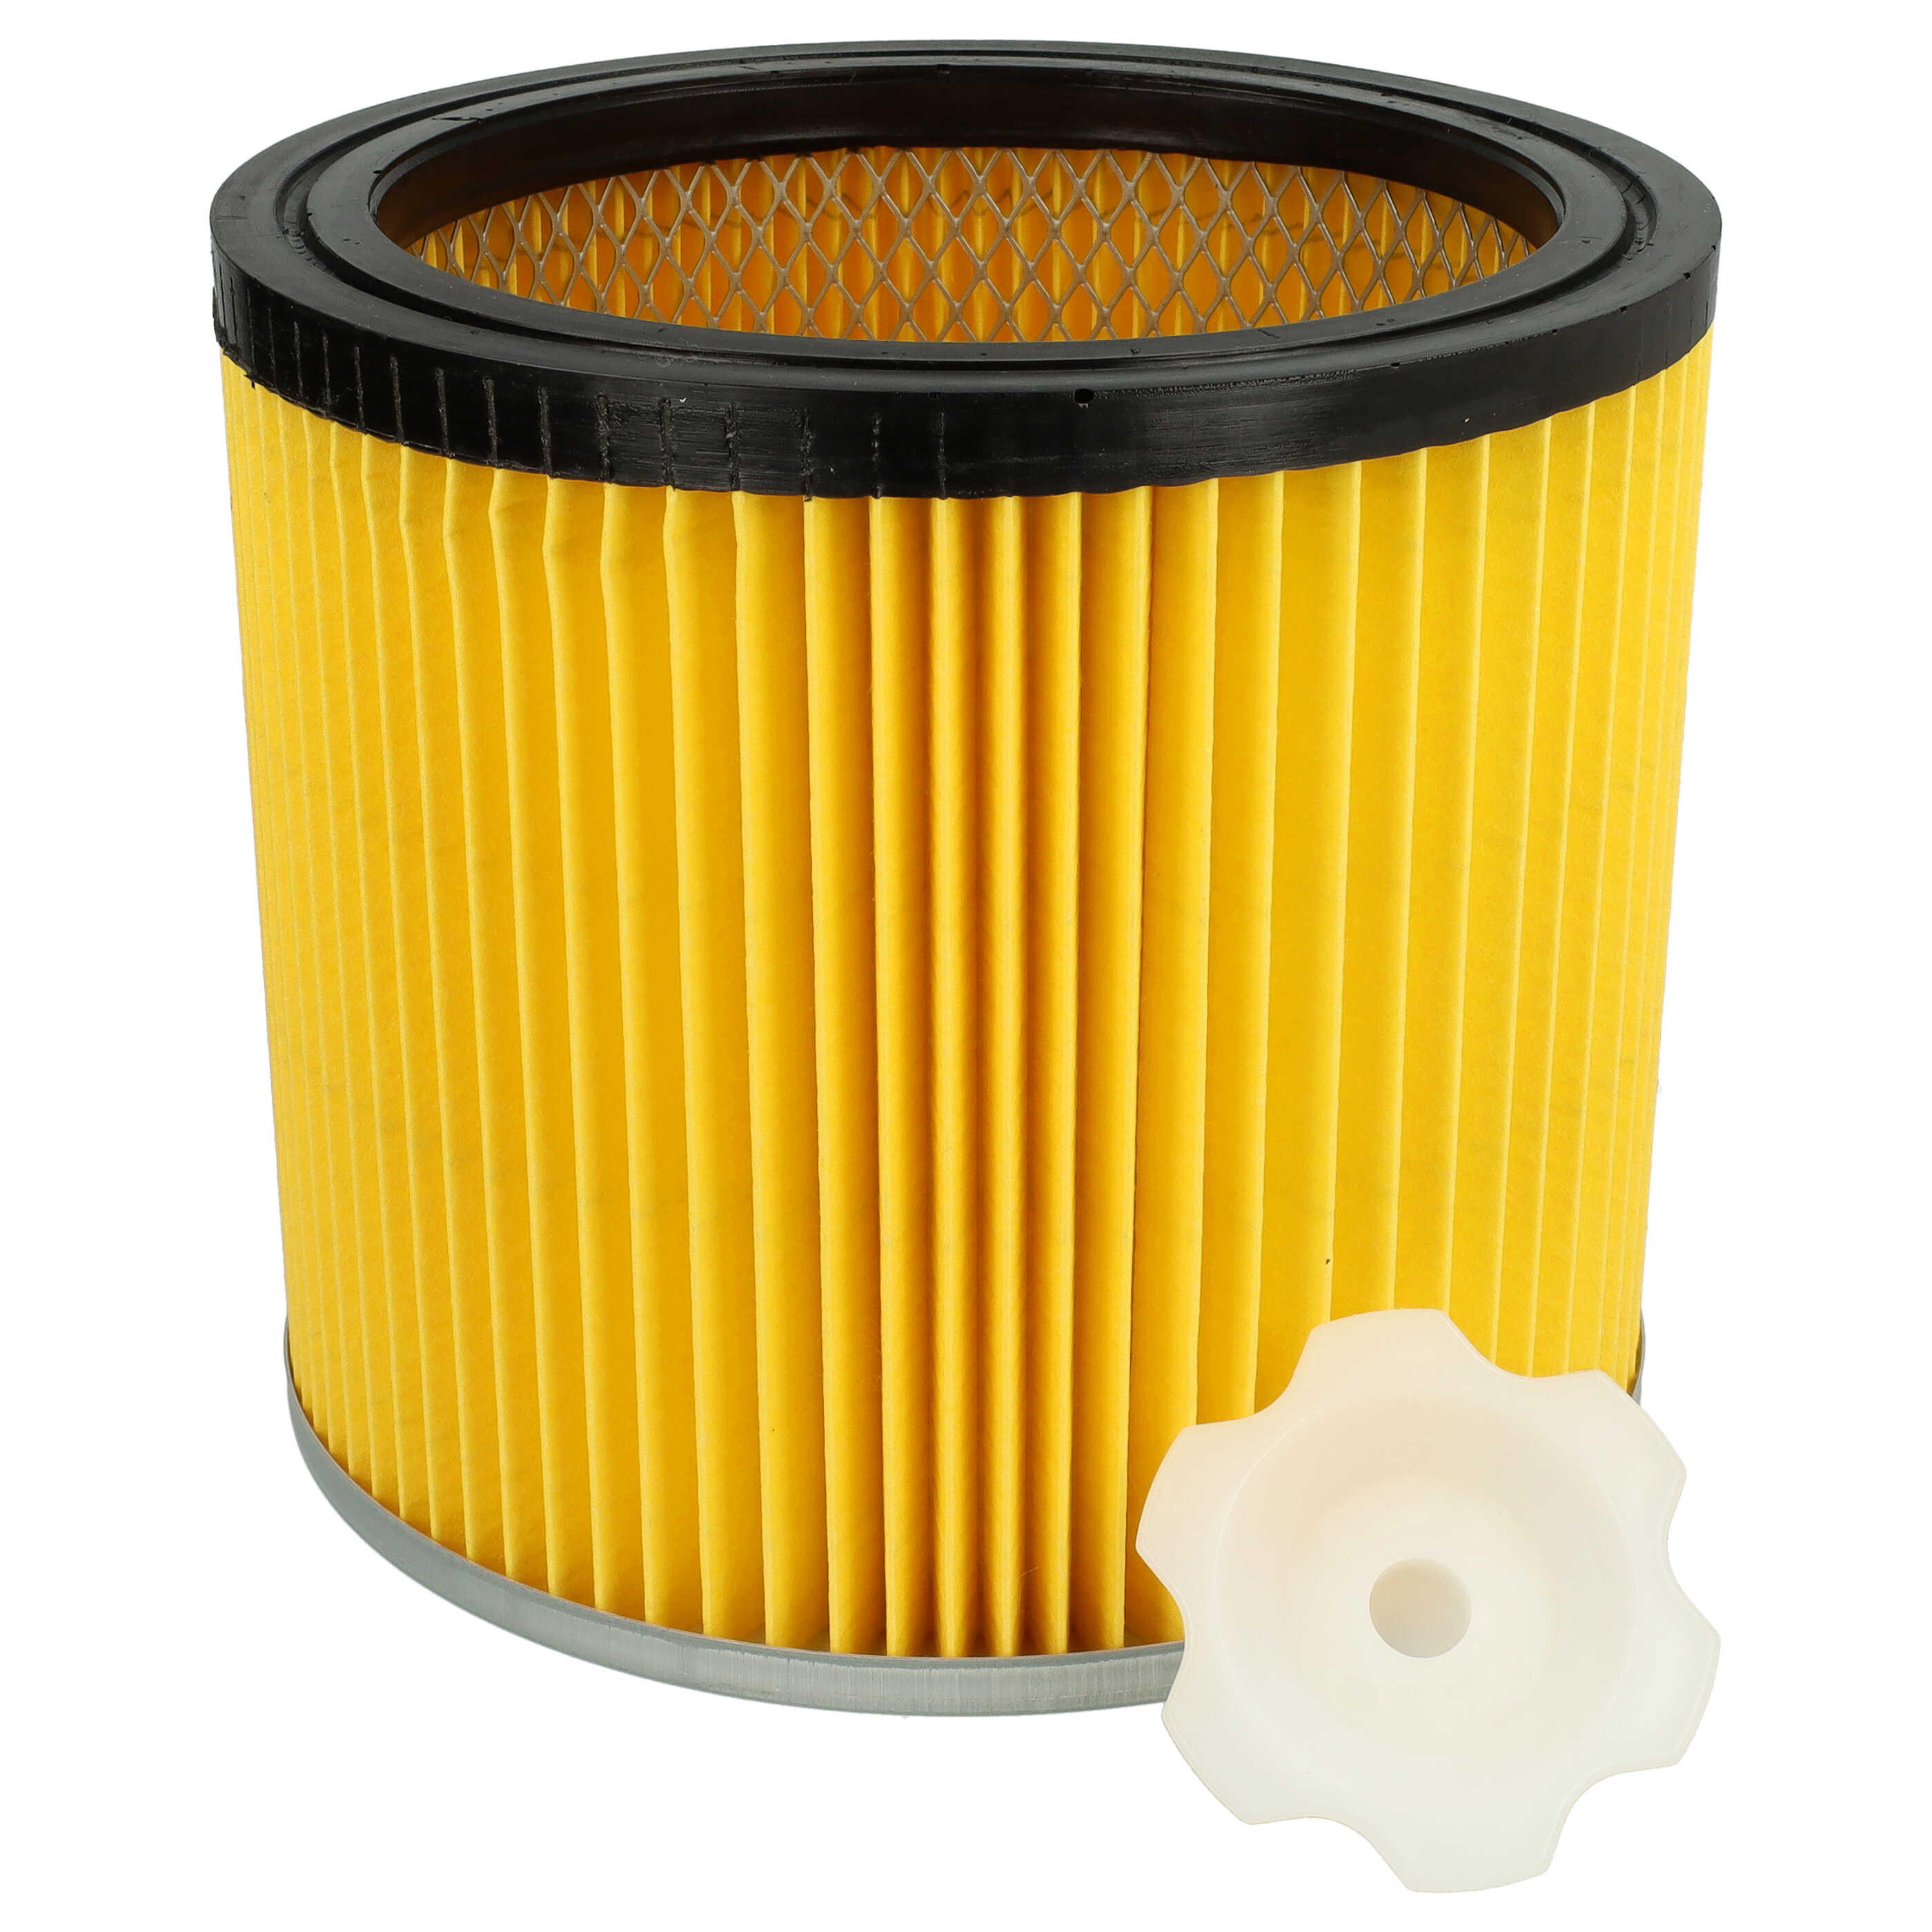 Filtro reemplaza Bosch 2 607 432 001, 2607432001 para aspiradora filtro plisado, negro / plata / amarillo